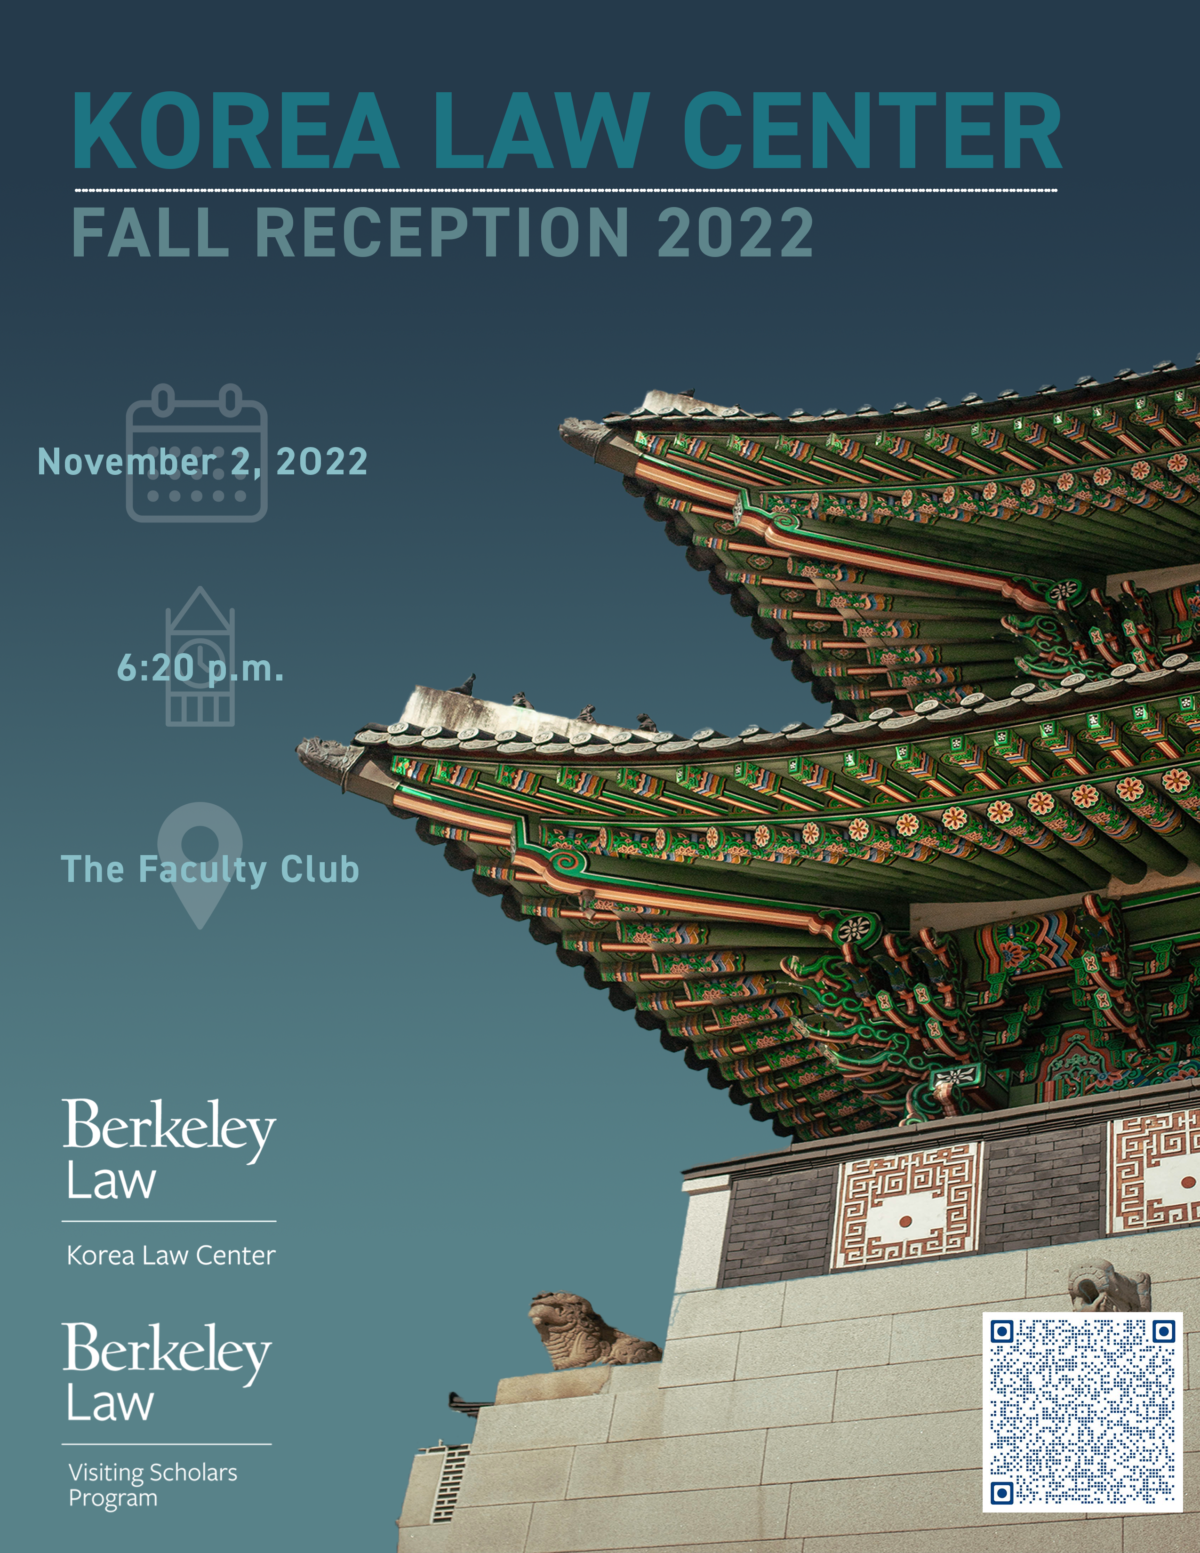 KLC Fall Reception 2022 Flyer